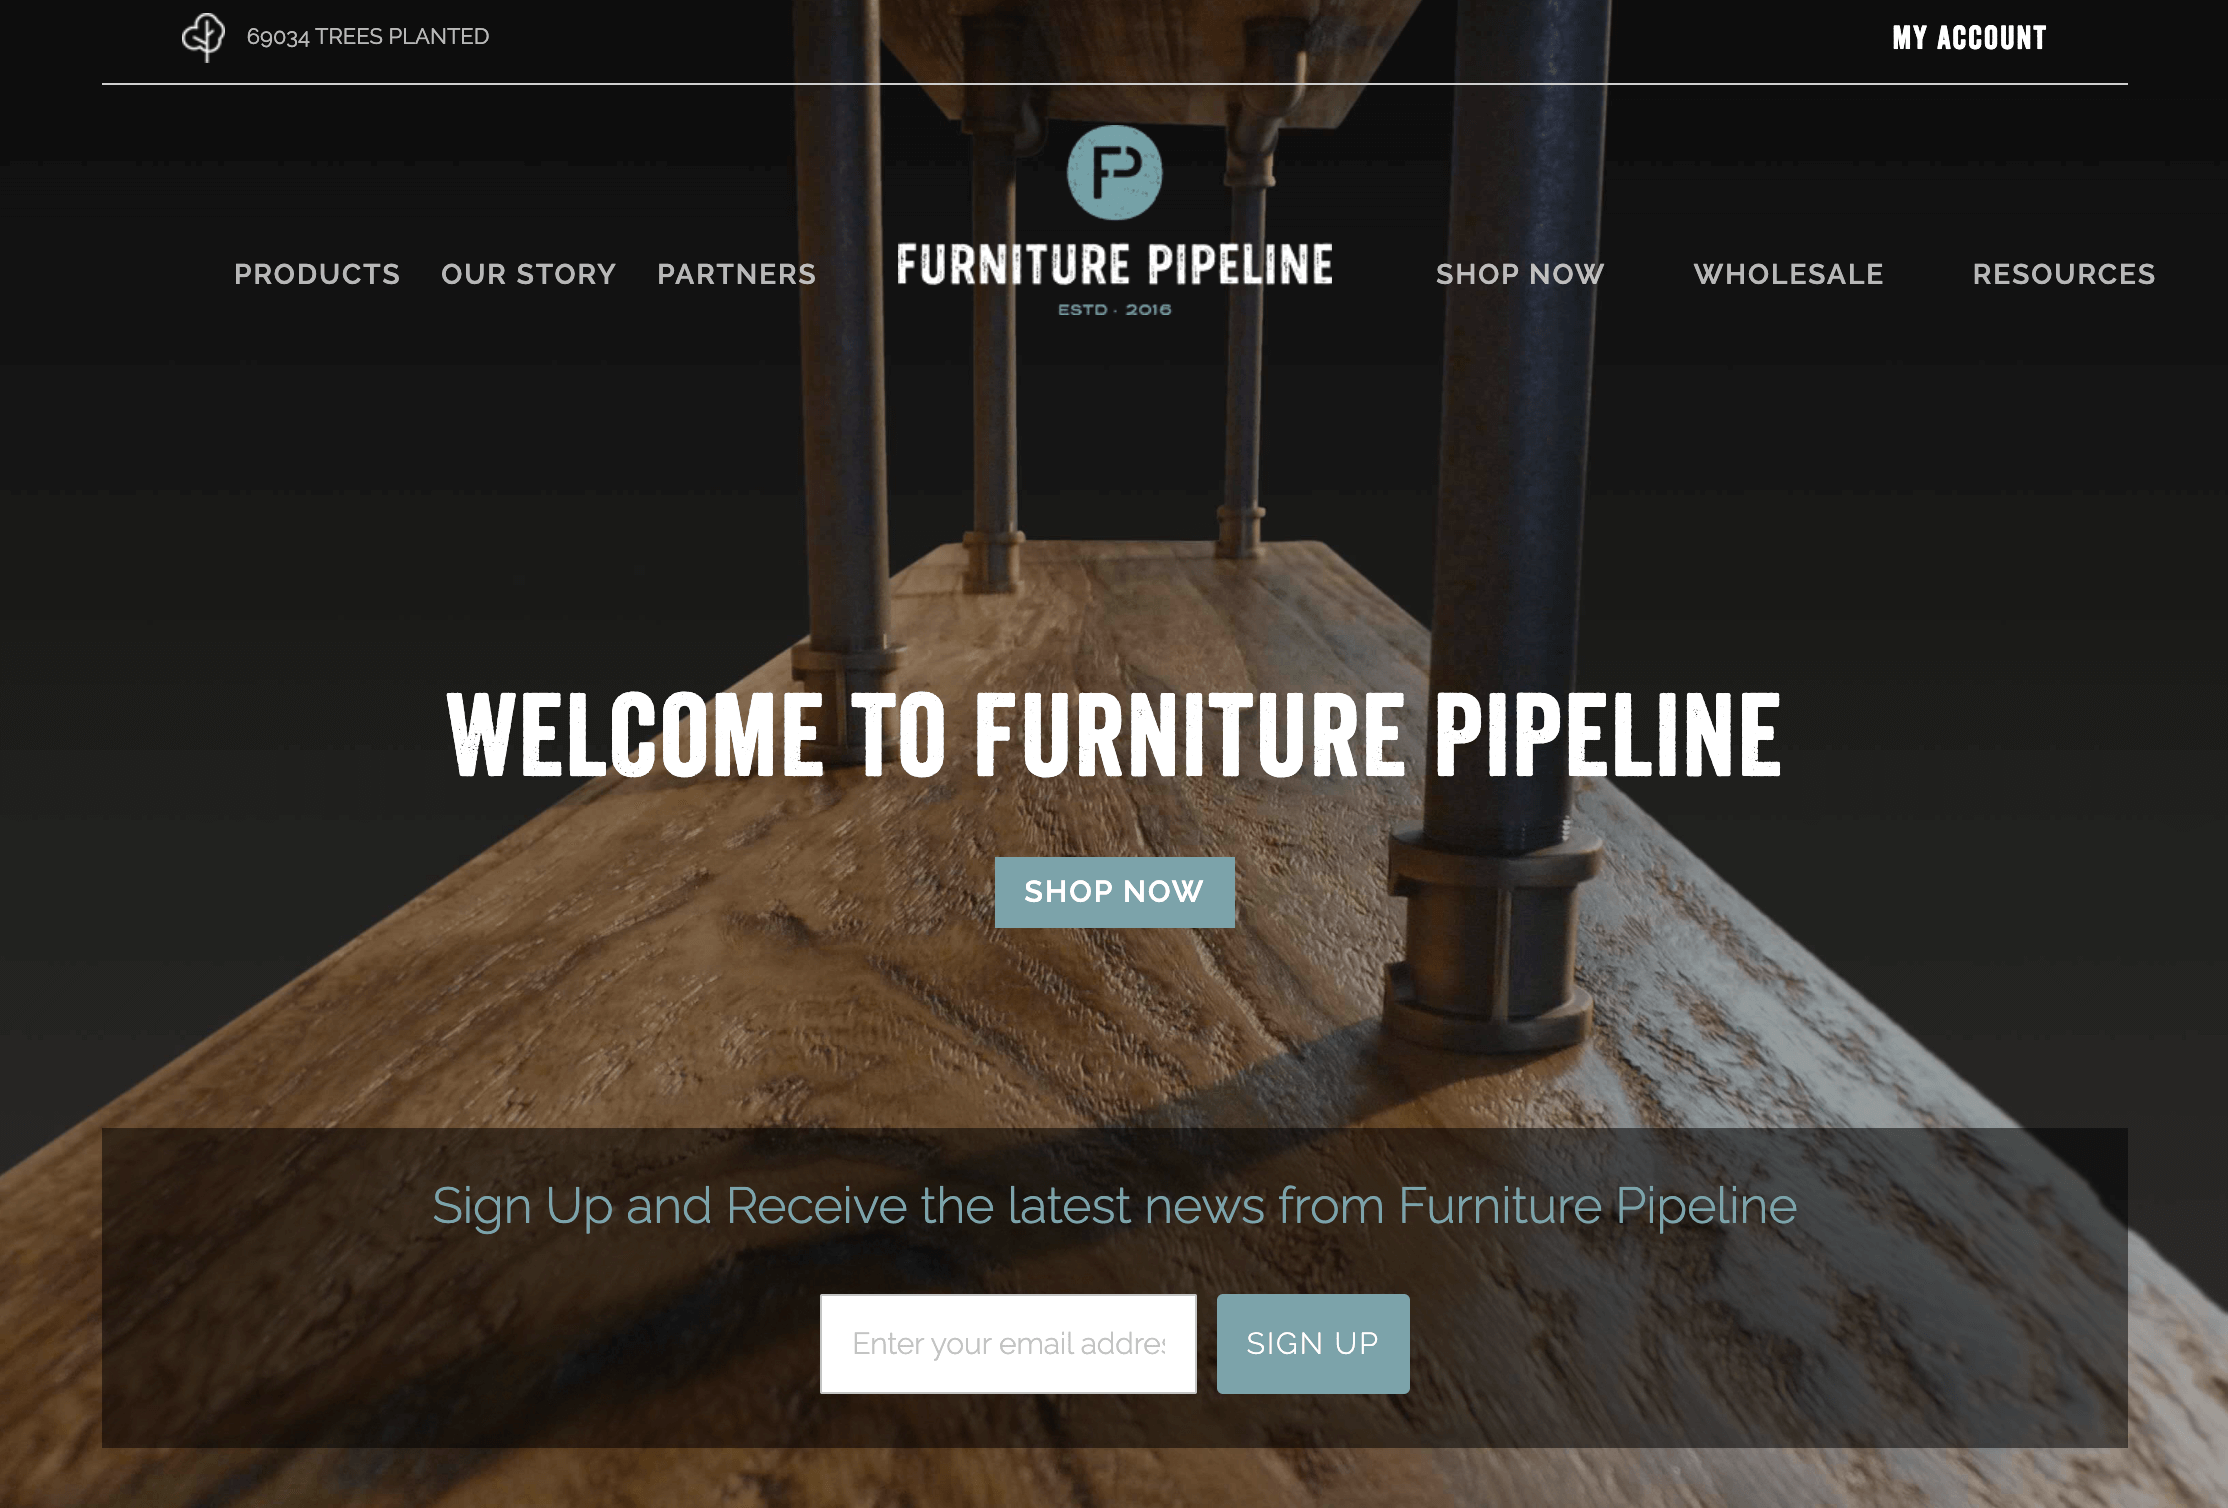 Furniture Pipeline's homepage